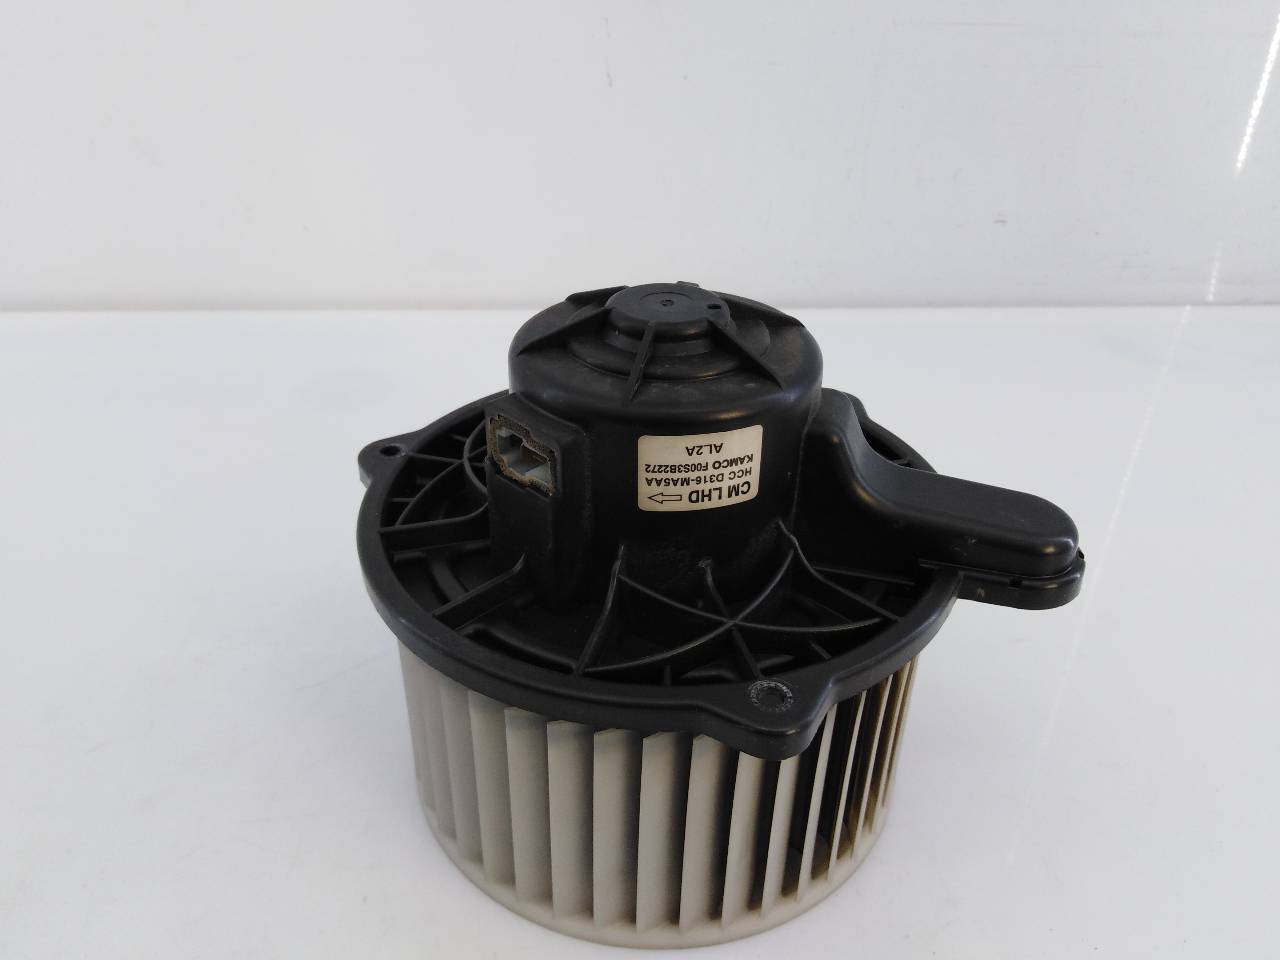 HYUNDAI Santa Fe CM (2006-2013) Вентилатор за отопление HCCD316MA5AA, E1-A2-3-1 24024844